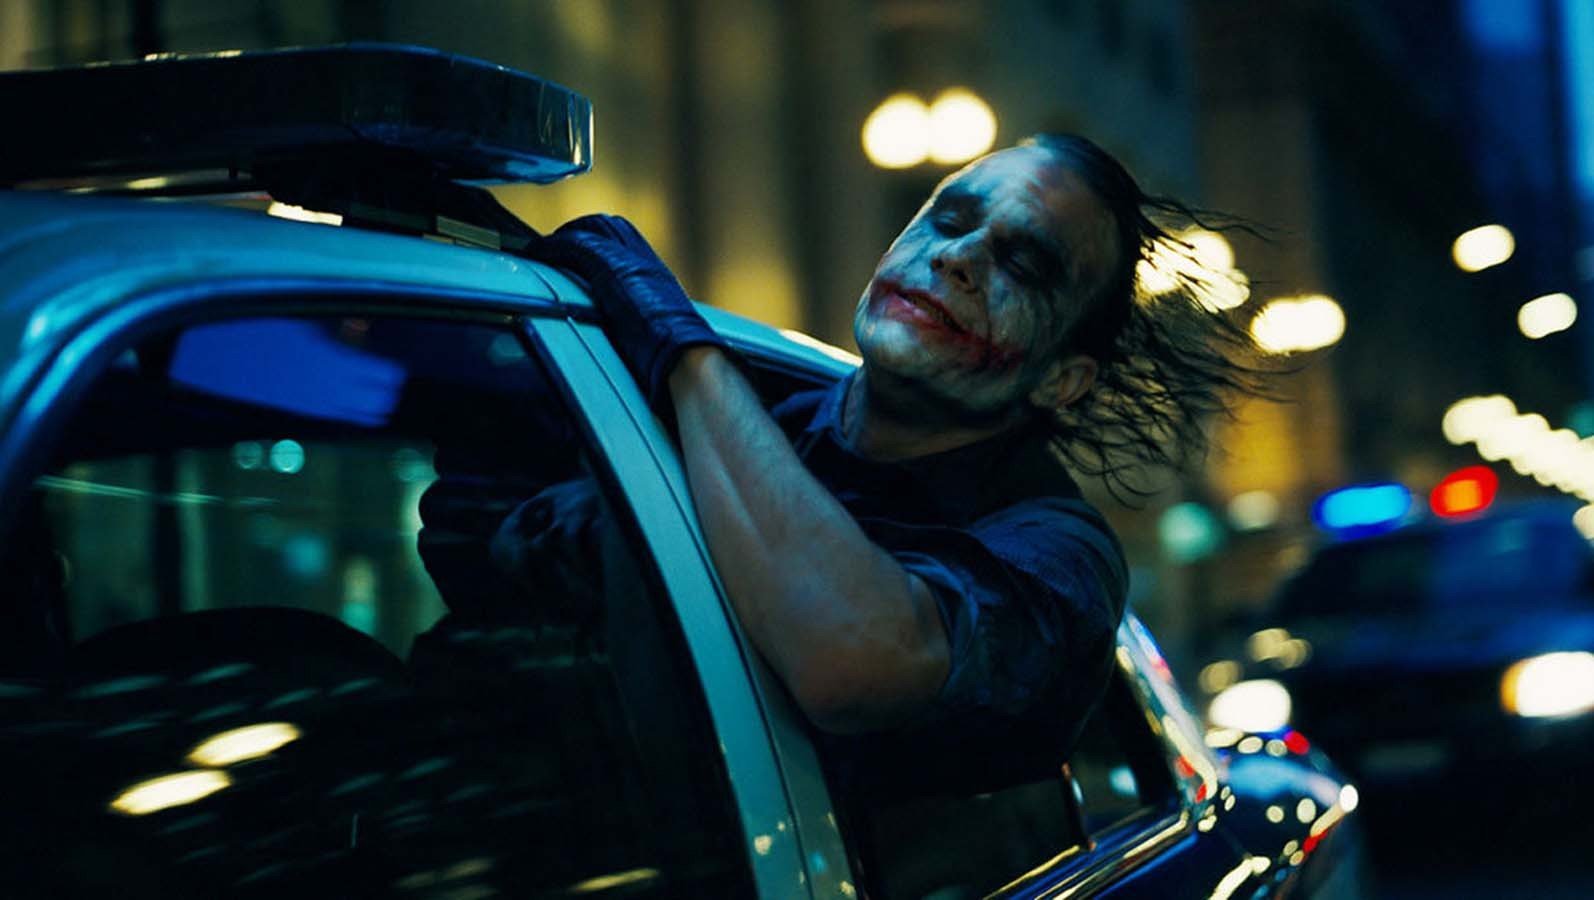 Joker Heath Ledger The Dark Knight HD Wallpapers  Desktop and Mobile  Images  Photos